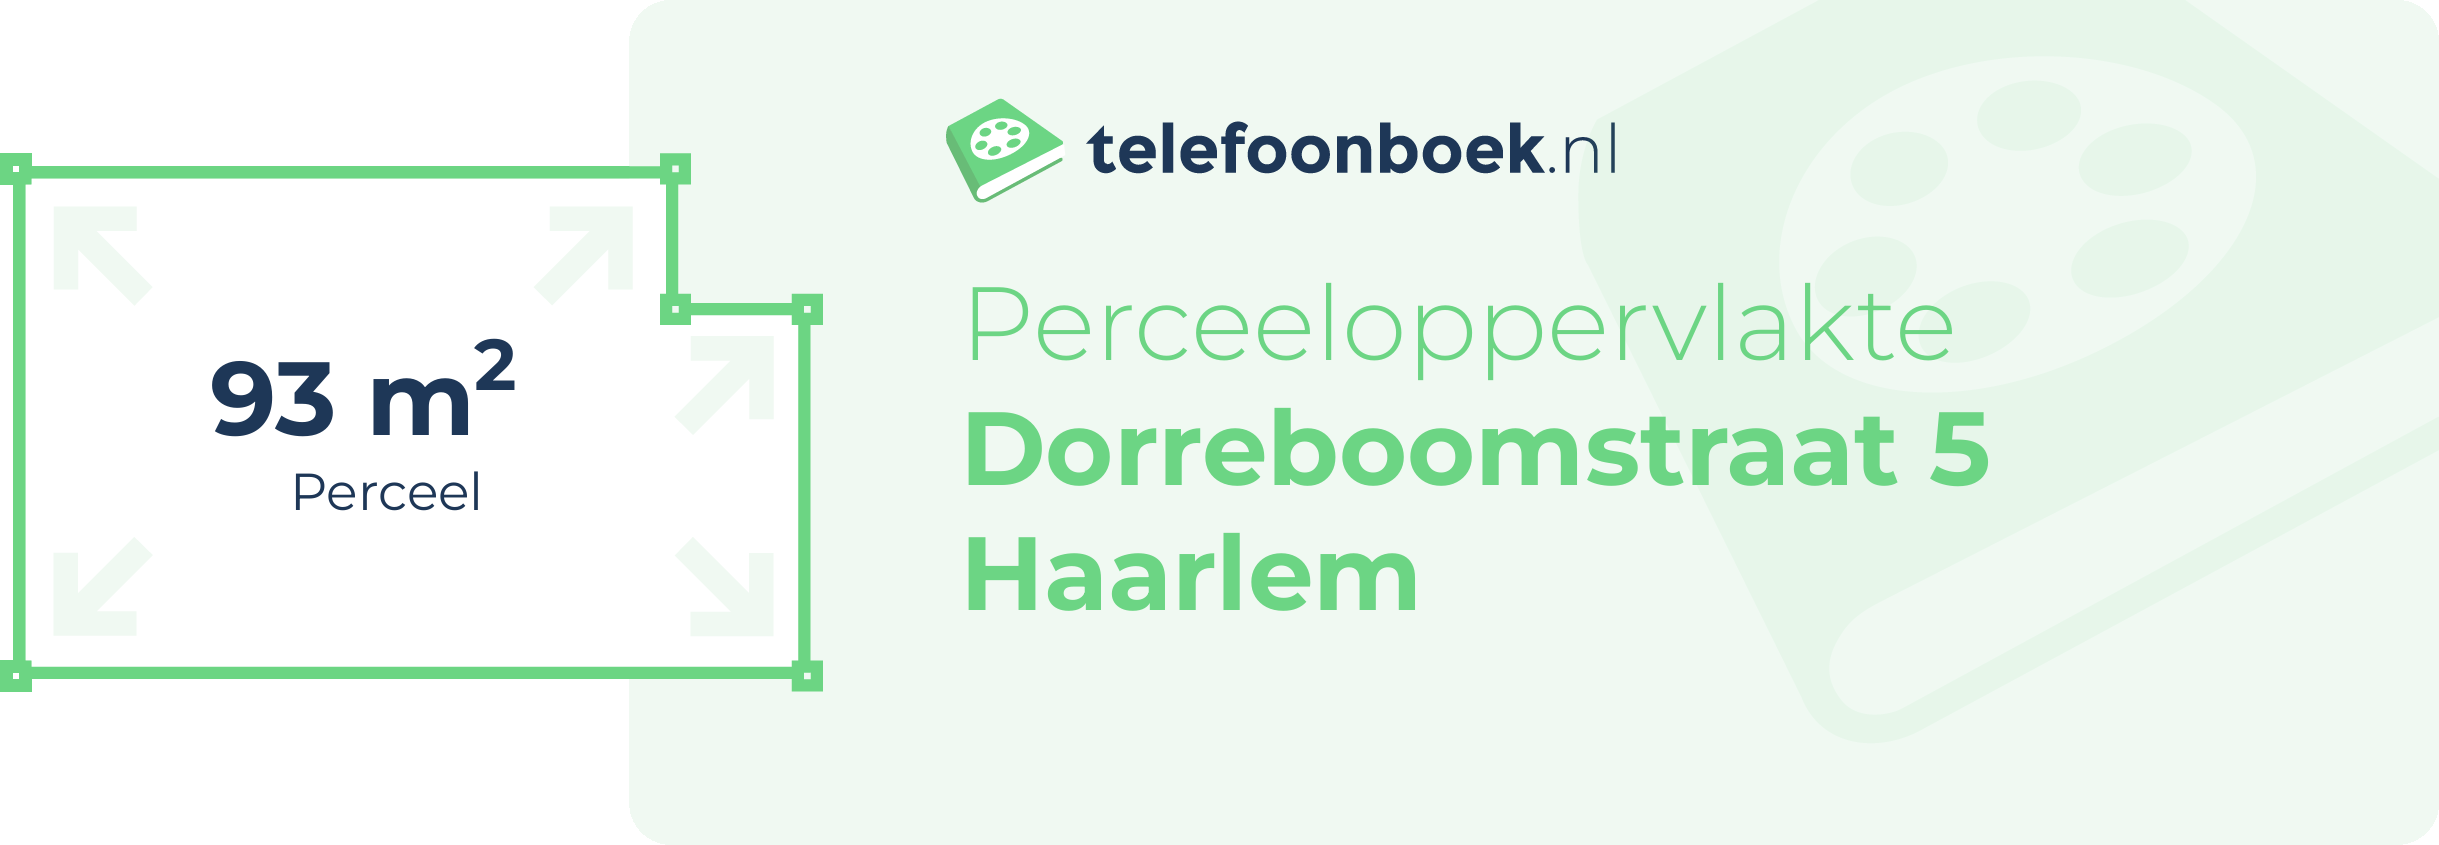 Perceeloppervlakte Dorreboomstraat 5 Haarlem